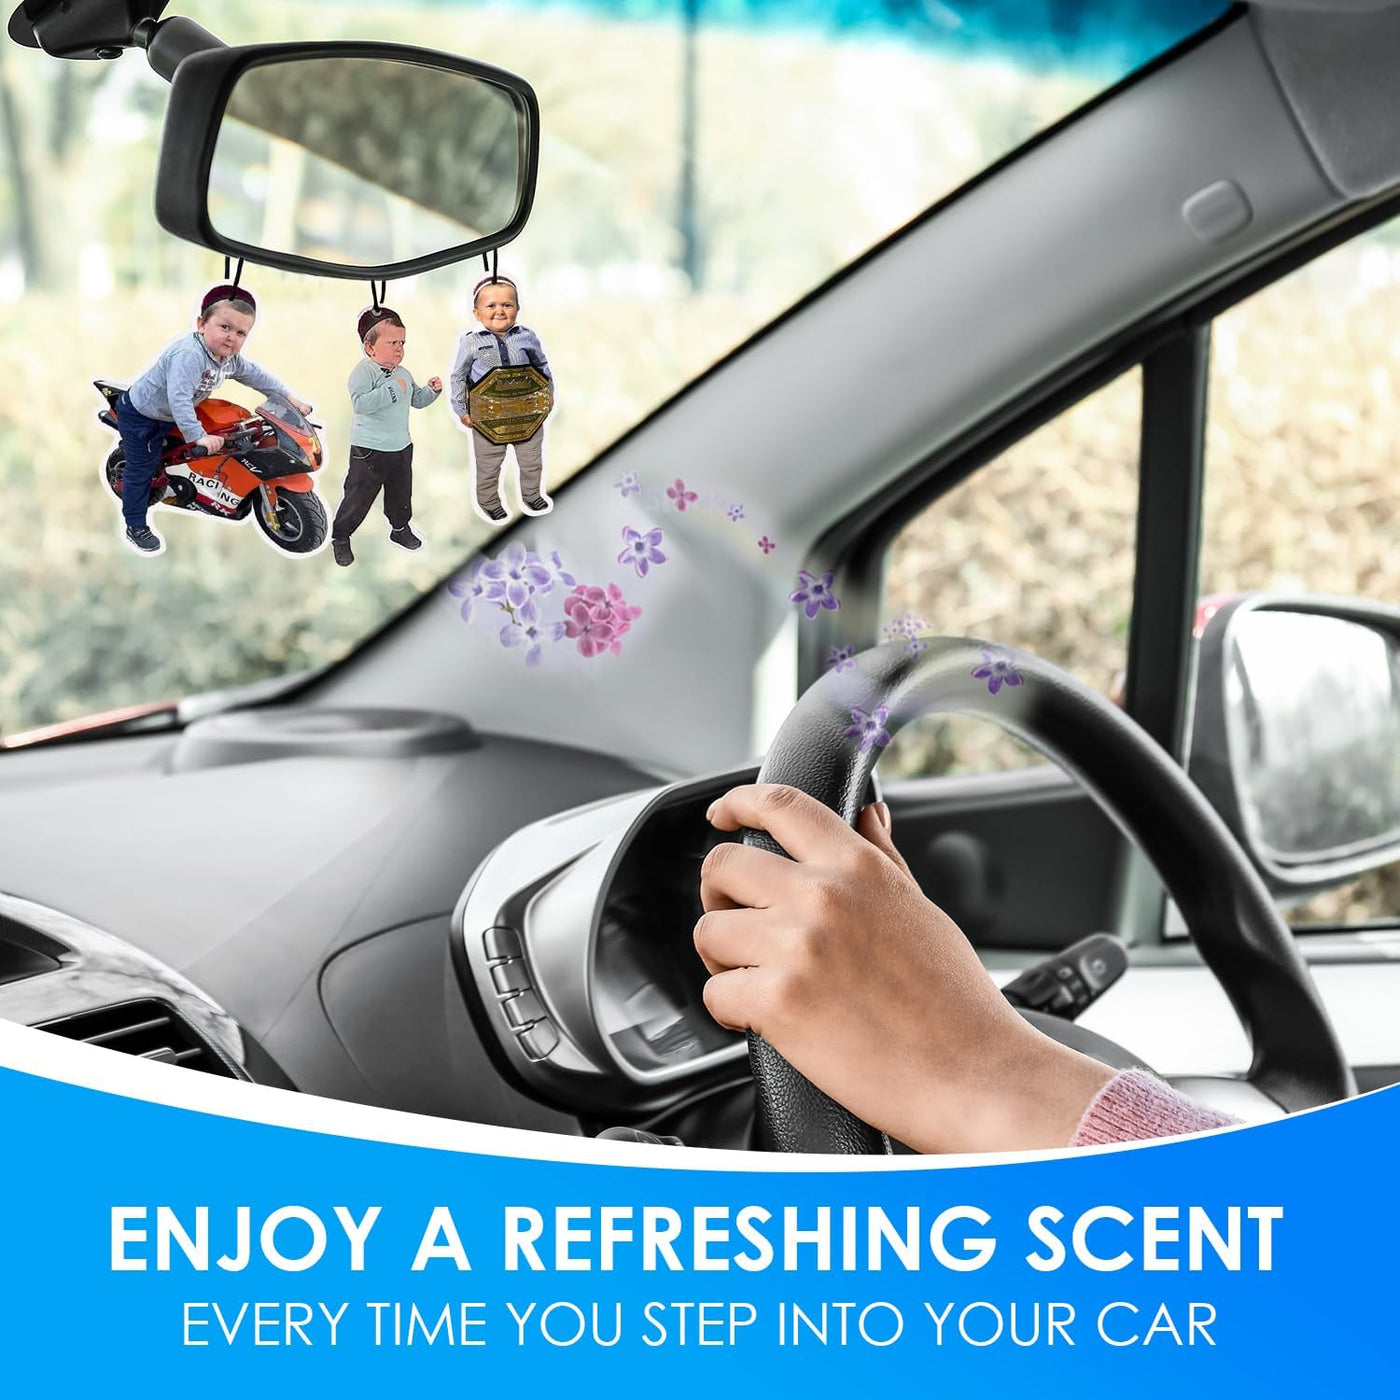 Hasbulla Air Freshener the Perfect Car Accessory